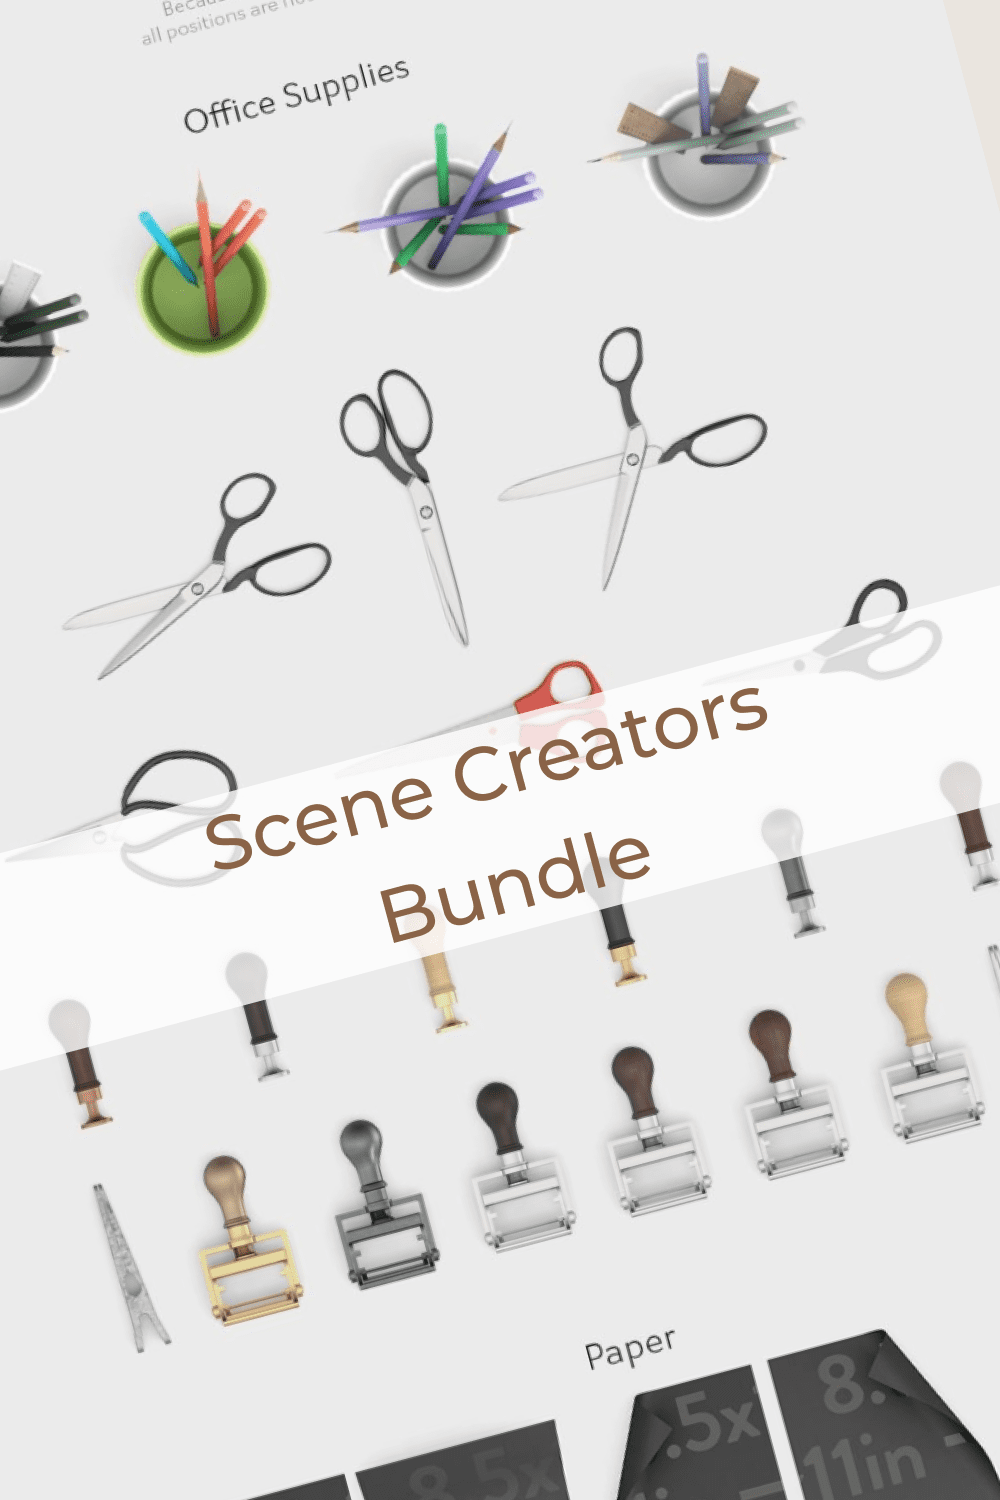 Scene Creators Bundle - "Office Supplies".